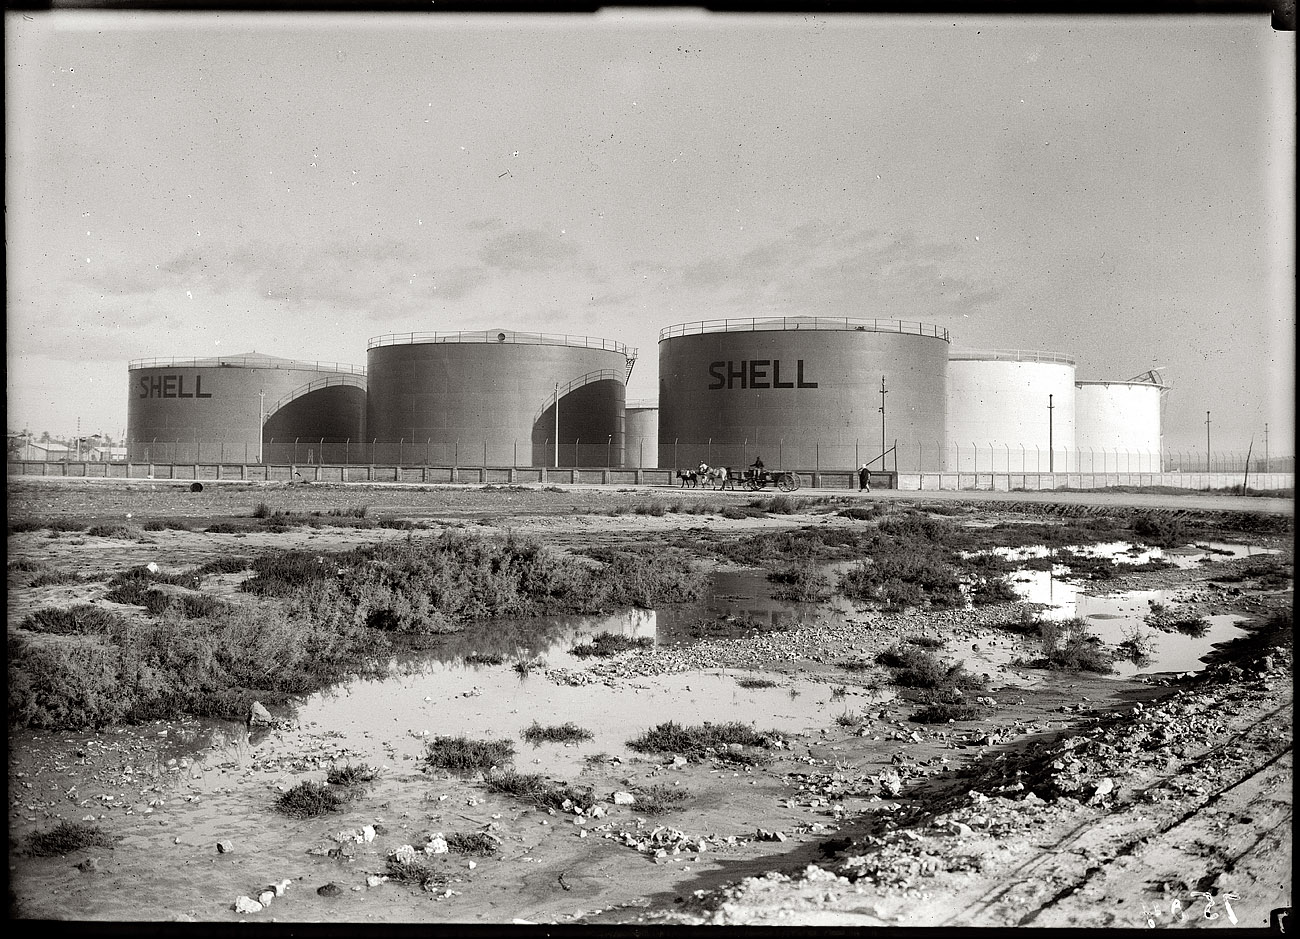 British Mandate Palestine circa 1937. "Shell oil tanks near Haifa close up." 5x7 dry plate glass negative, Matson Photo Service. View full size.